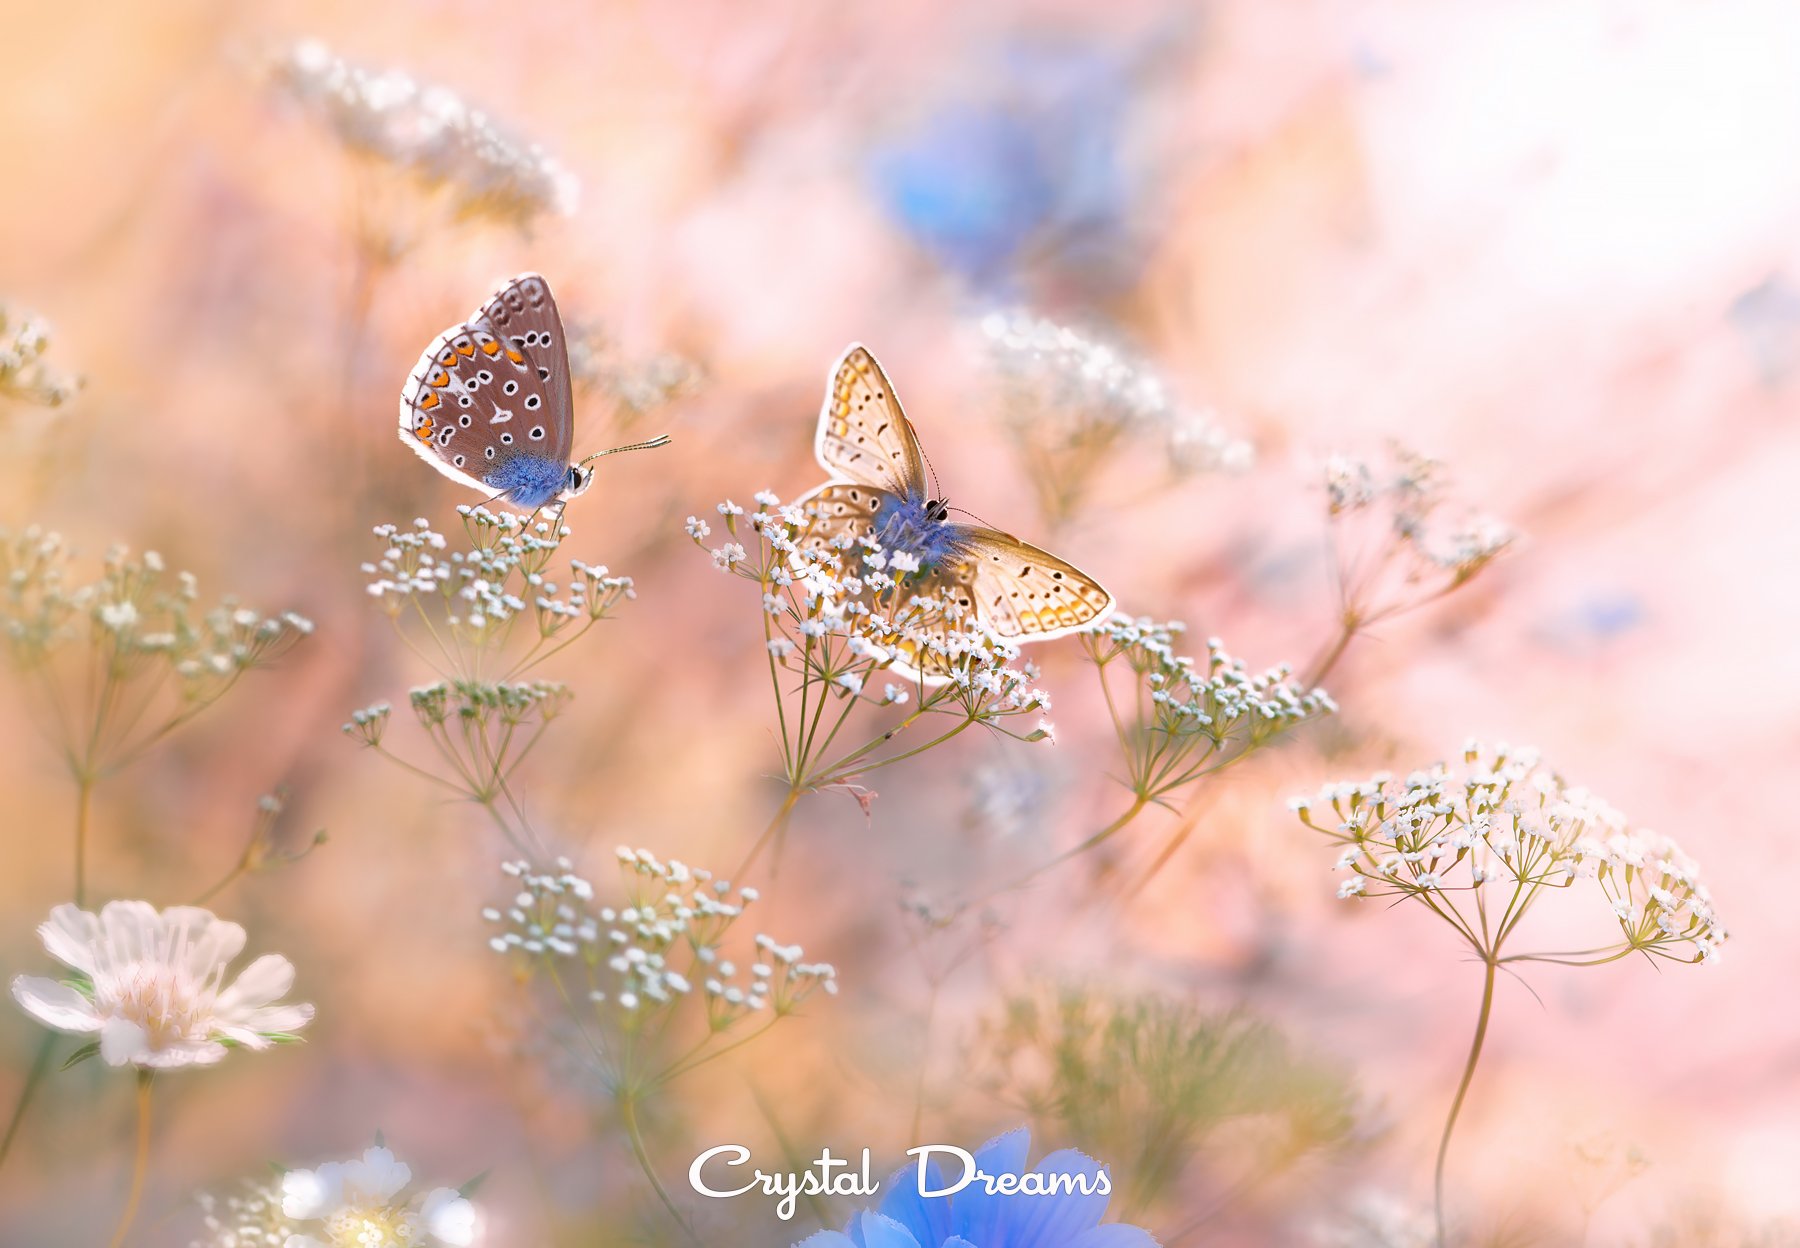 Butterfly, Color, Crystal Dreams, Flower, Macro, Meadow, Nature, Summer, Татьяна Крылова